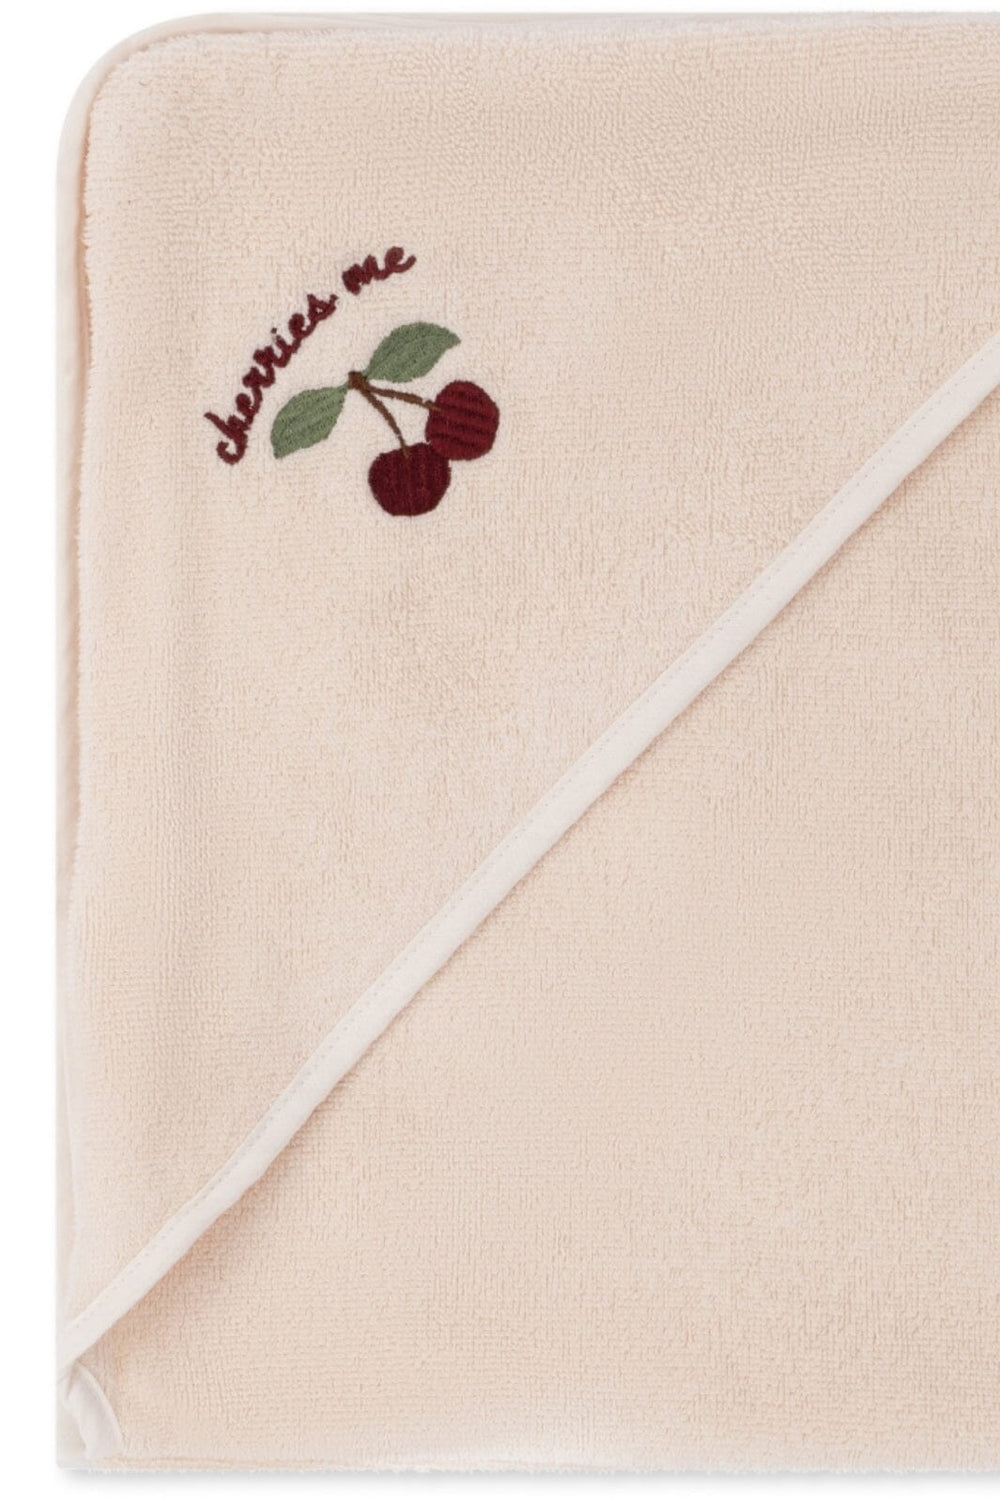 Konges Sløjd - Terry Towel Embroidery - Cherry Håndklæder 